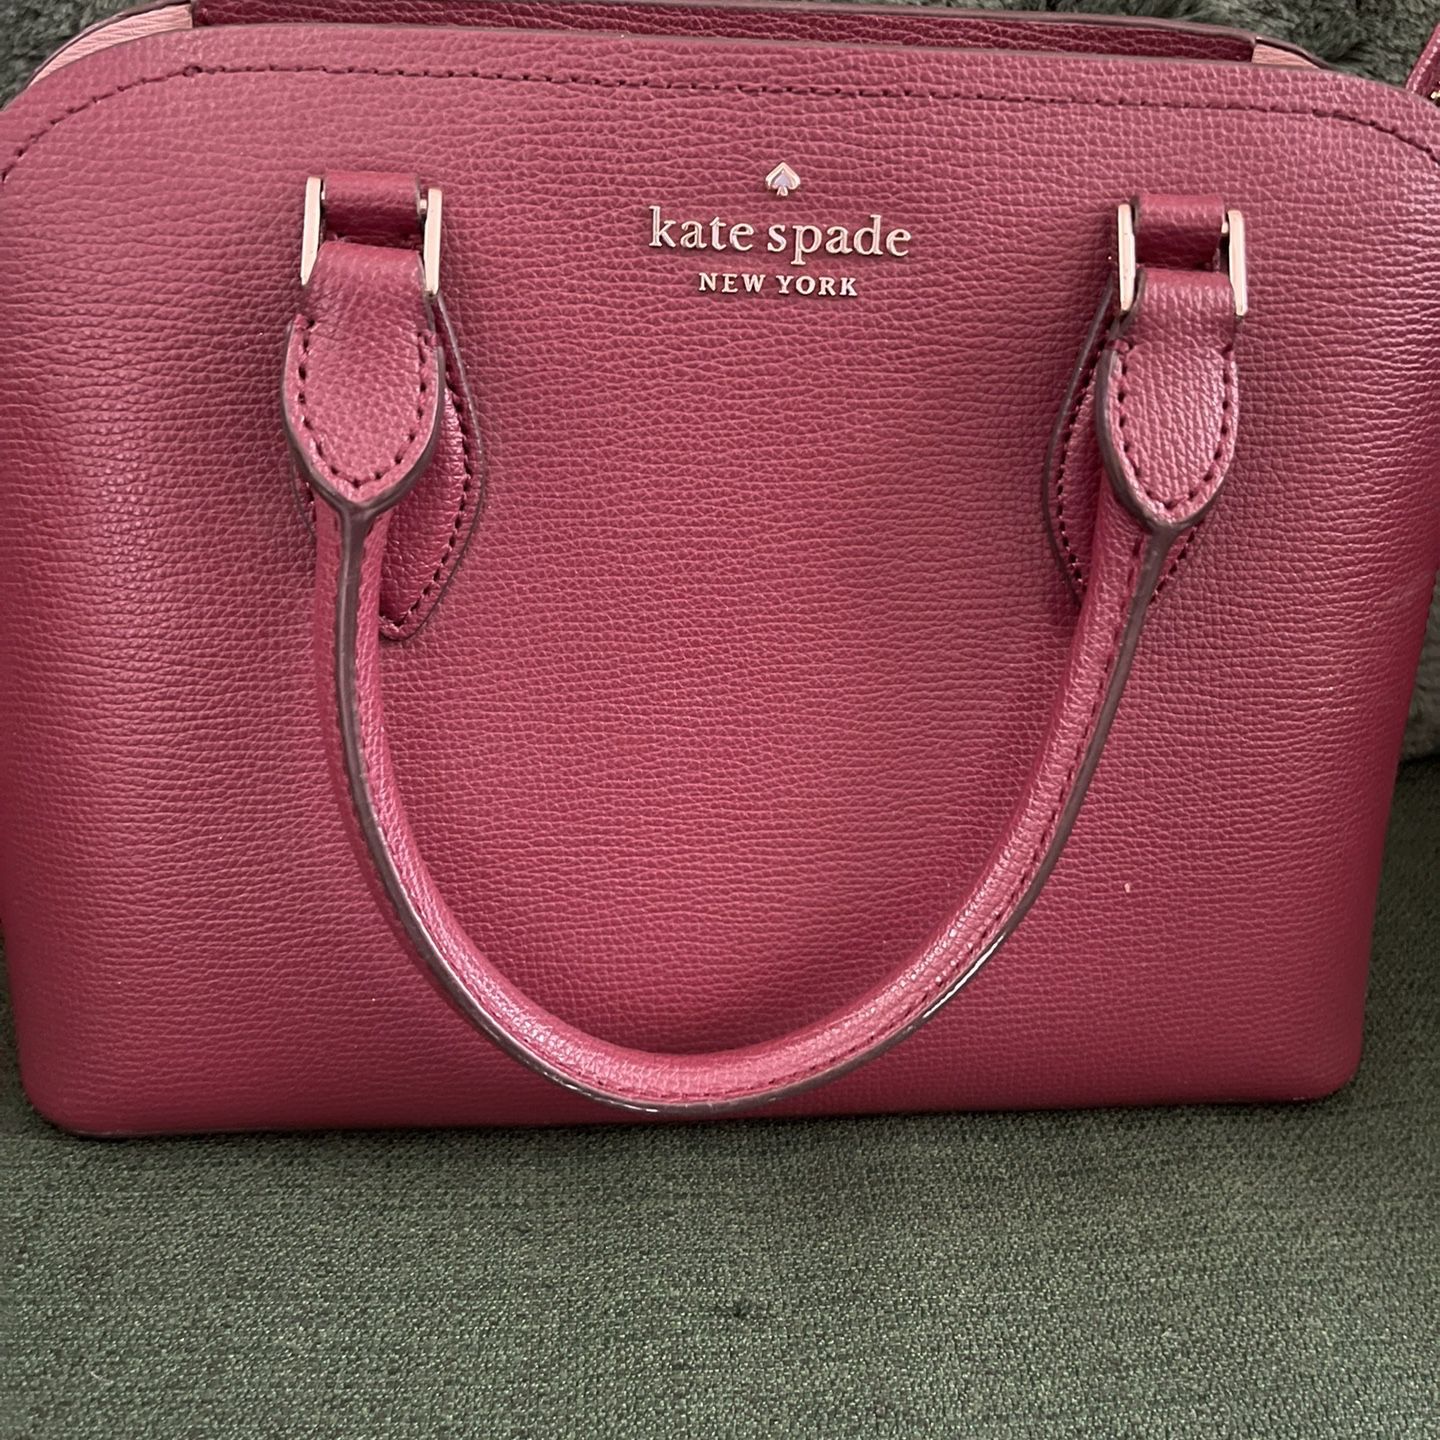 Liz Claiborne purse for Sale in Sunnyvale, CA - OfferUp